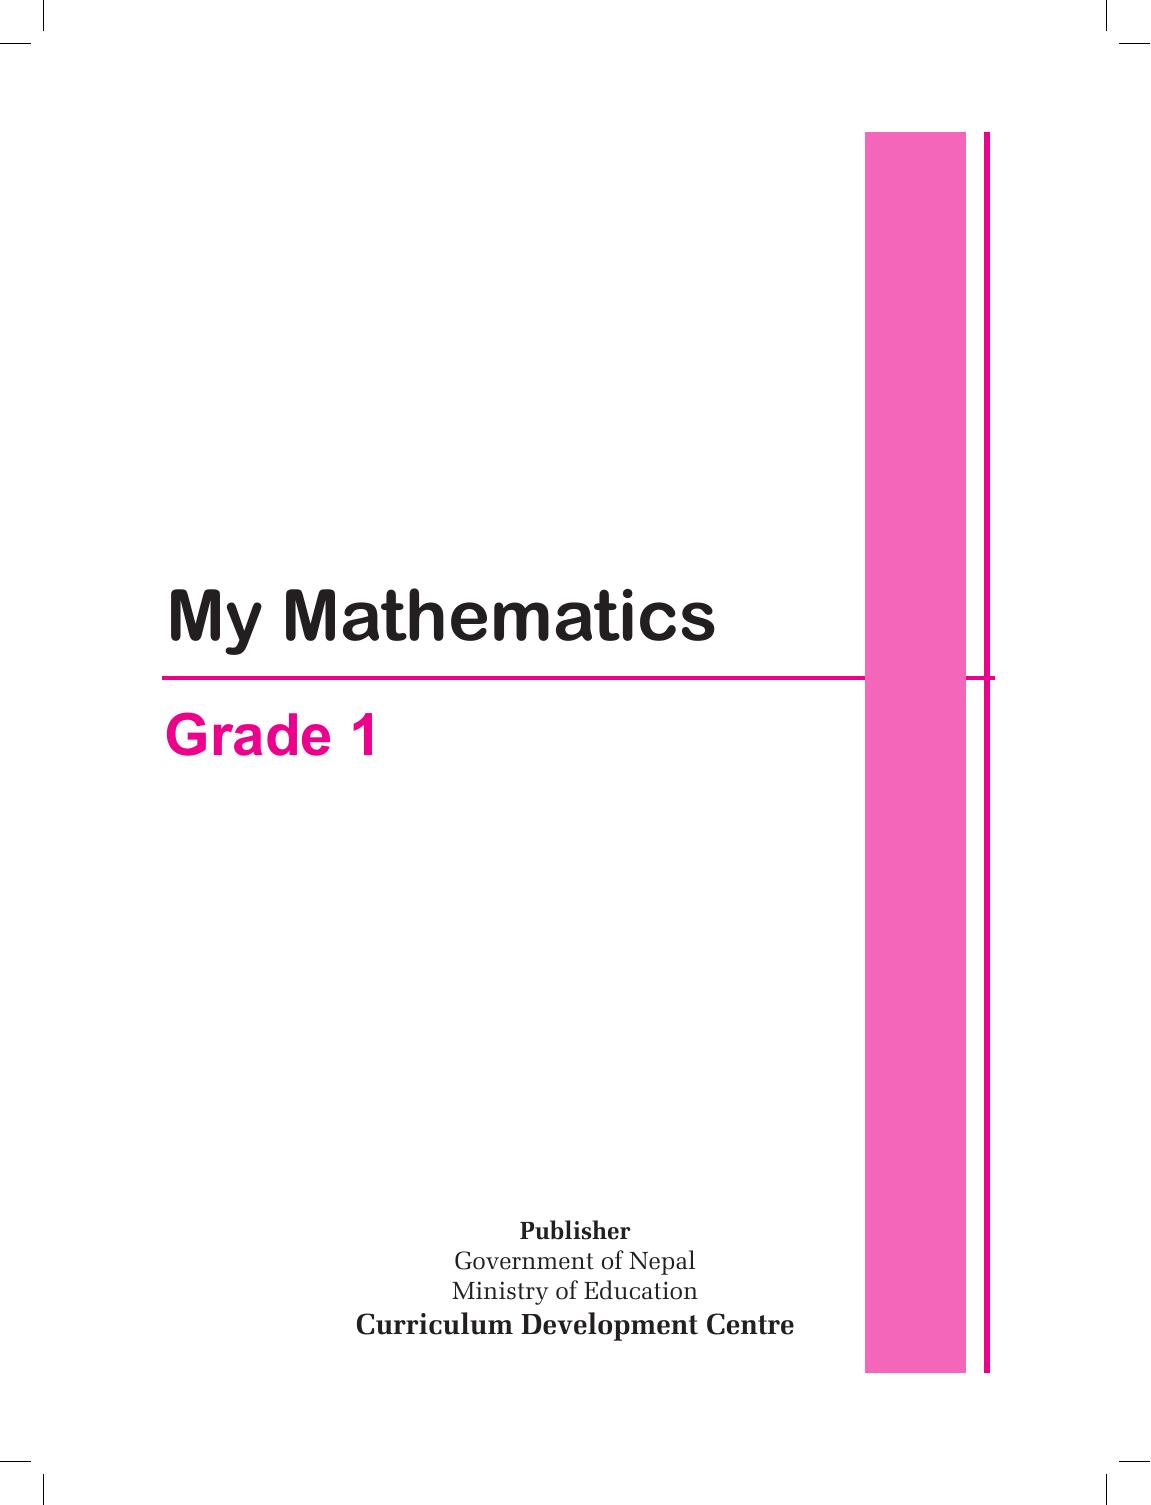 CDC 2017 - My Mathematics Grade 1